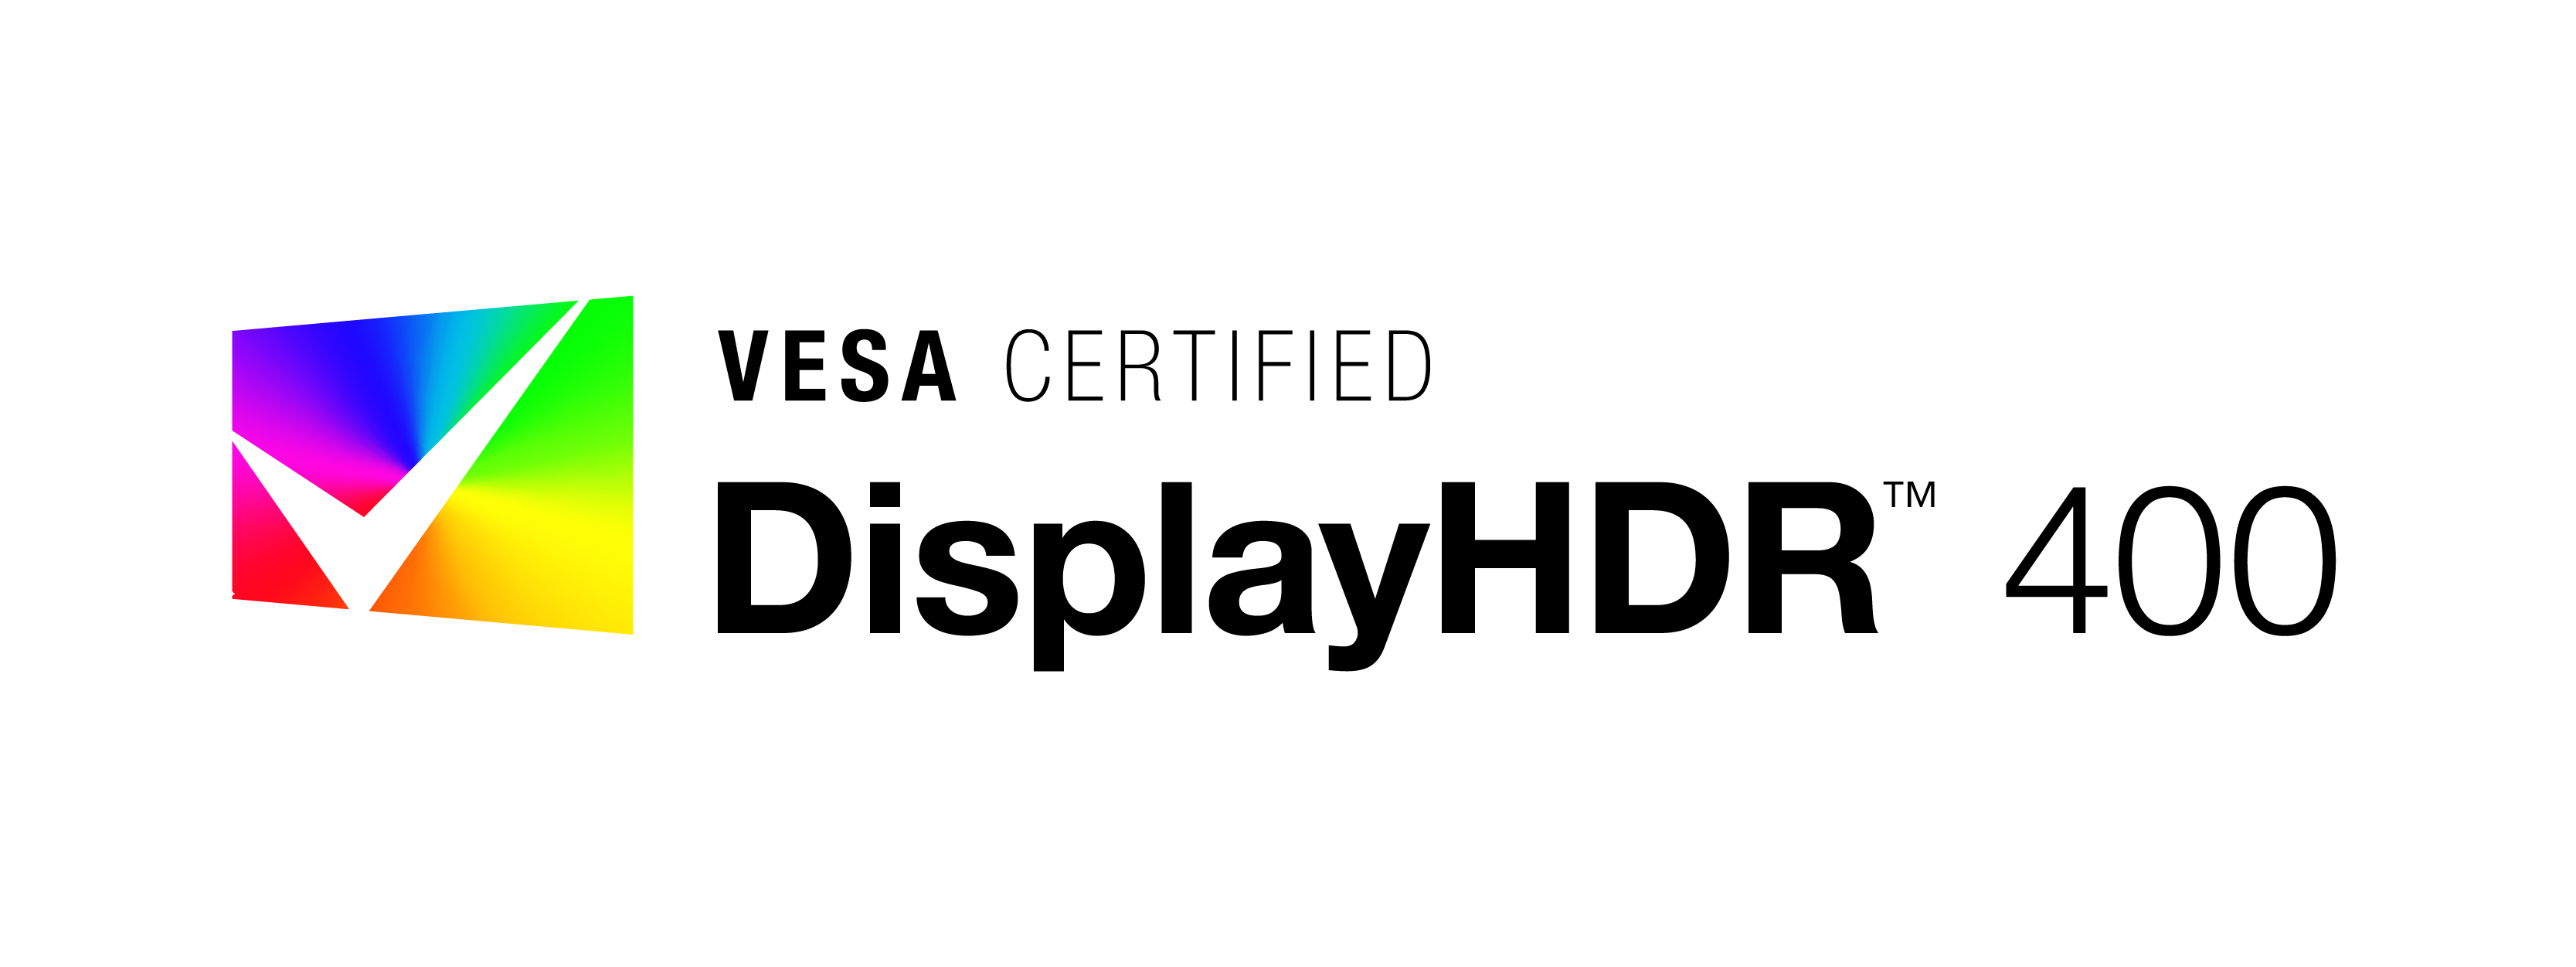 VESA Certified DisplayHDR 400